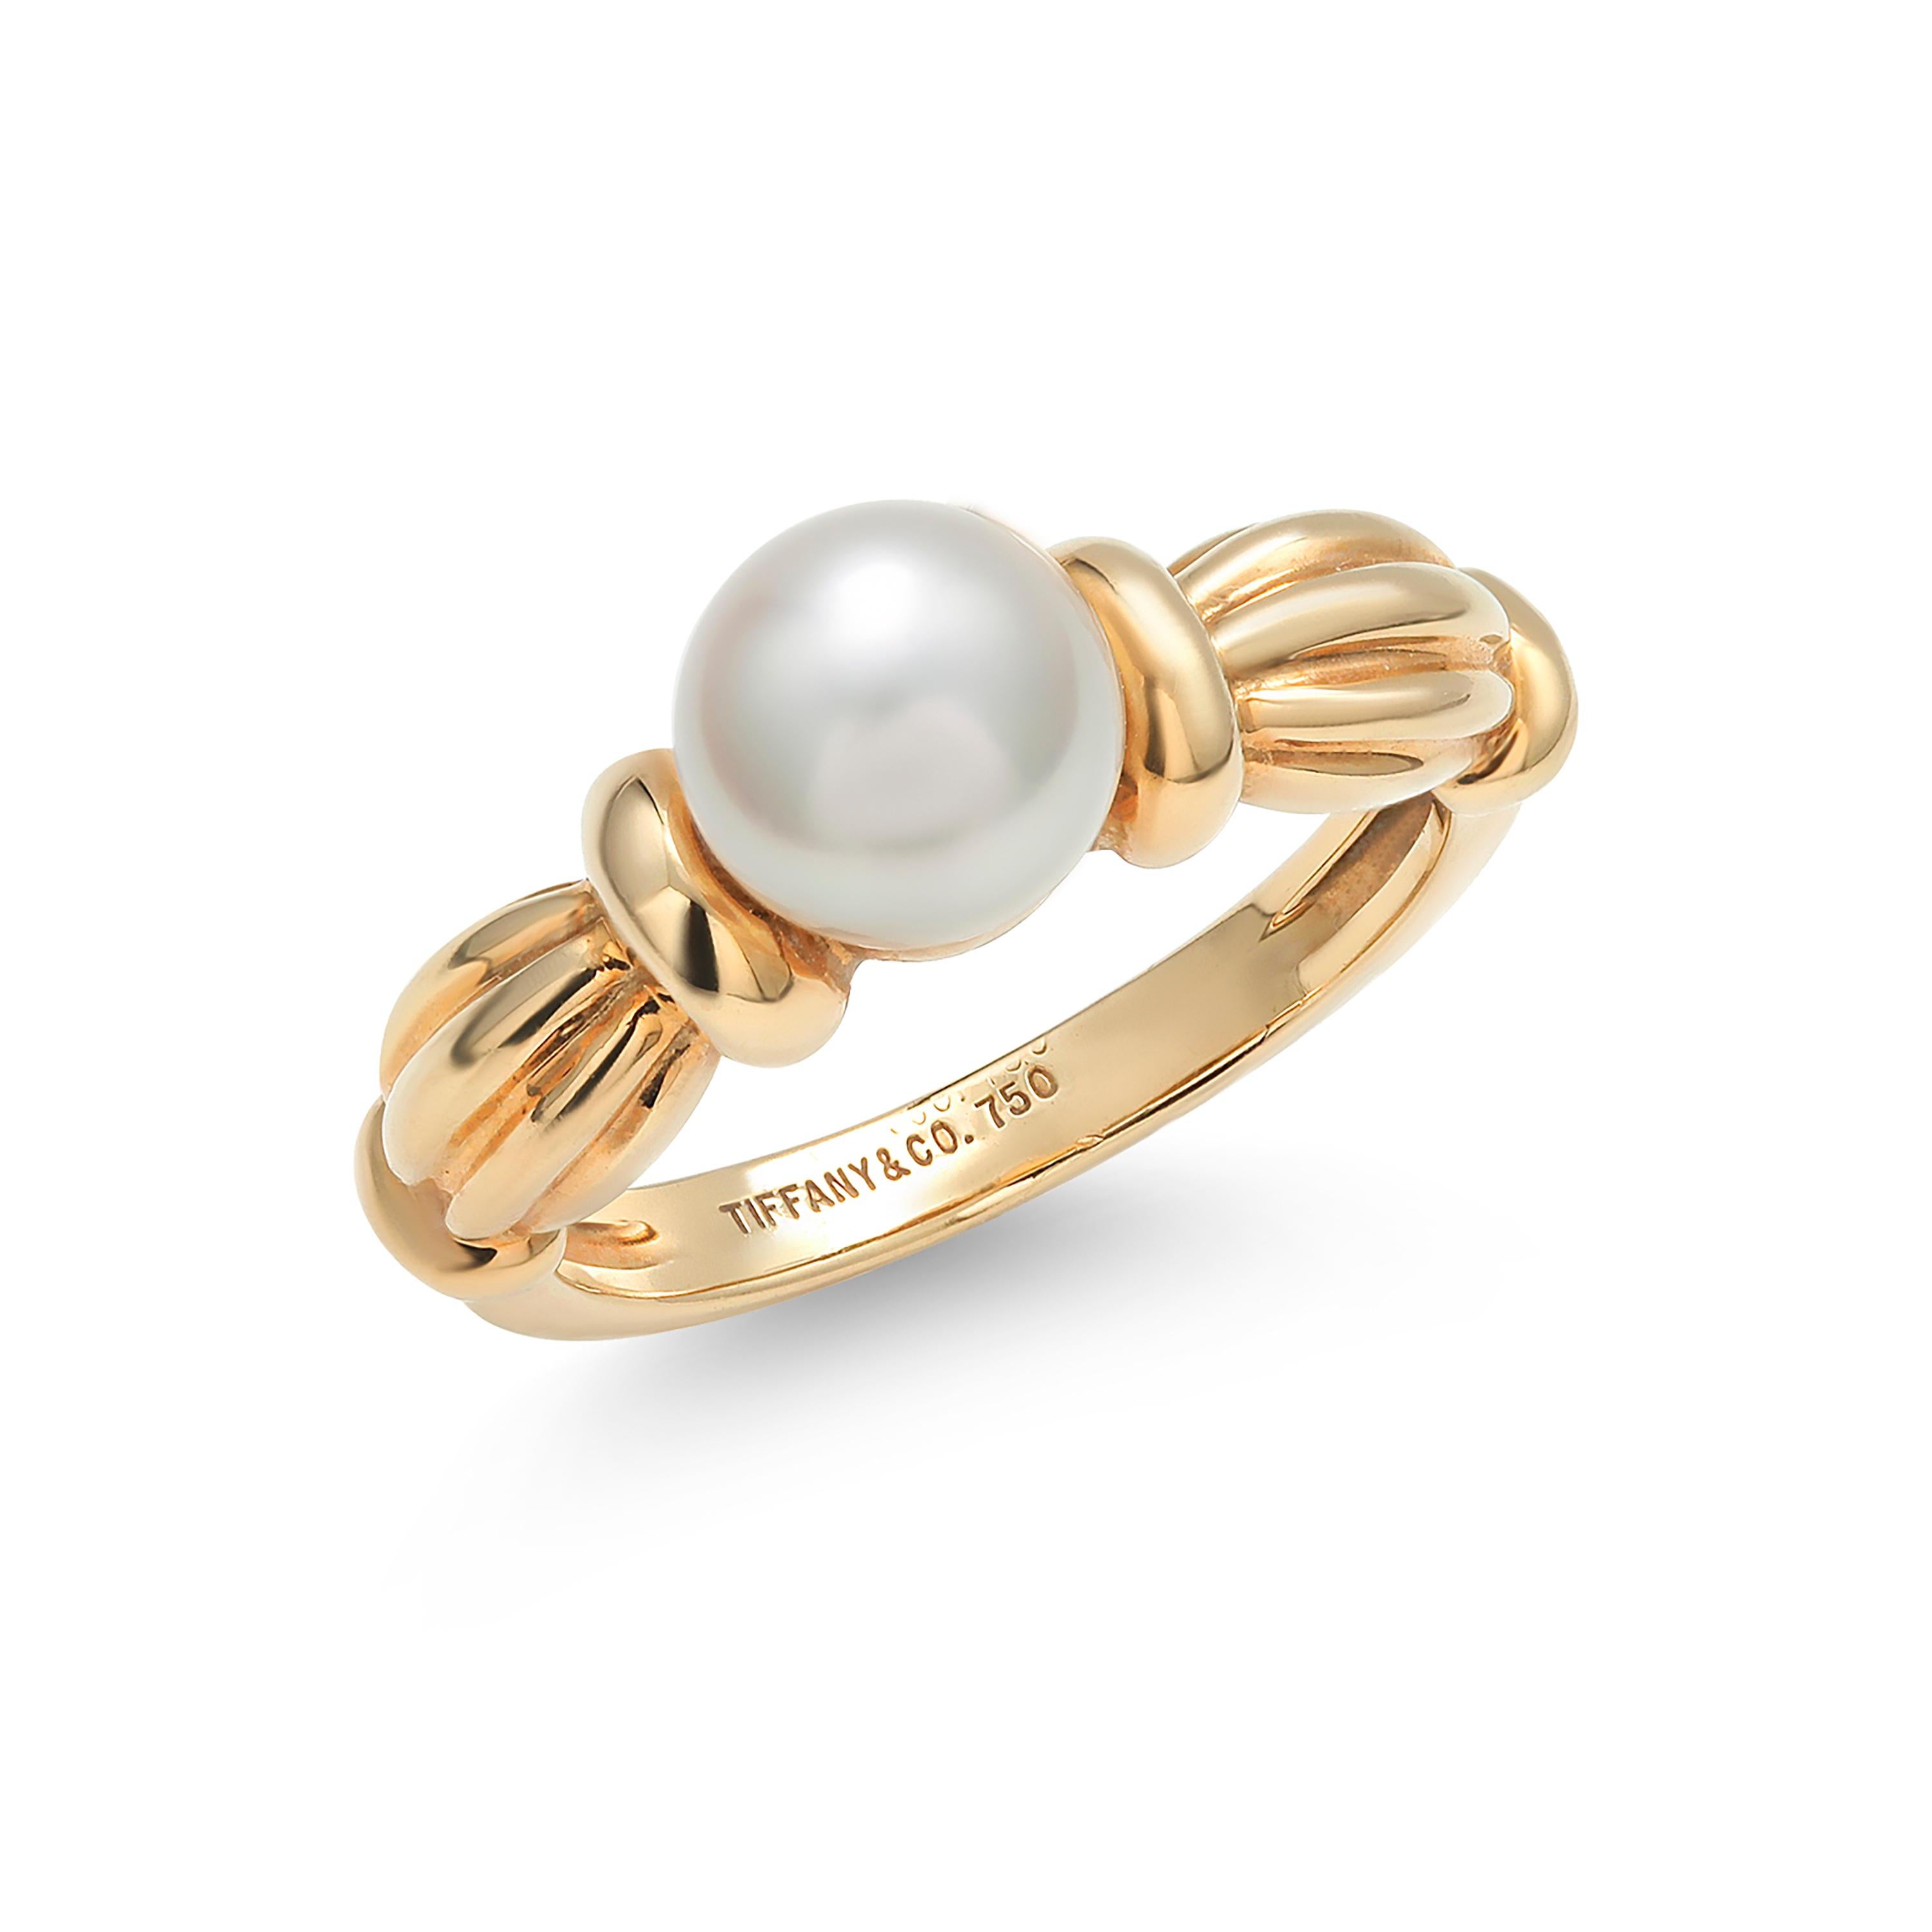  Tiffany and Co Bague en or jaune 18 carats et perles Unisexe 